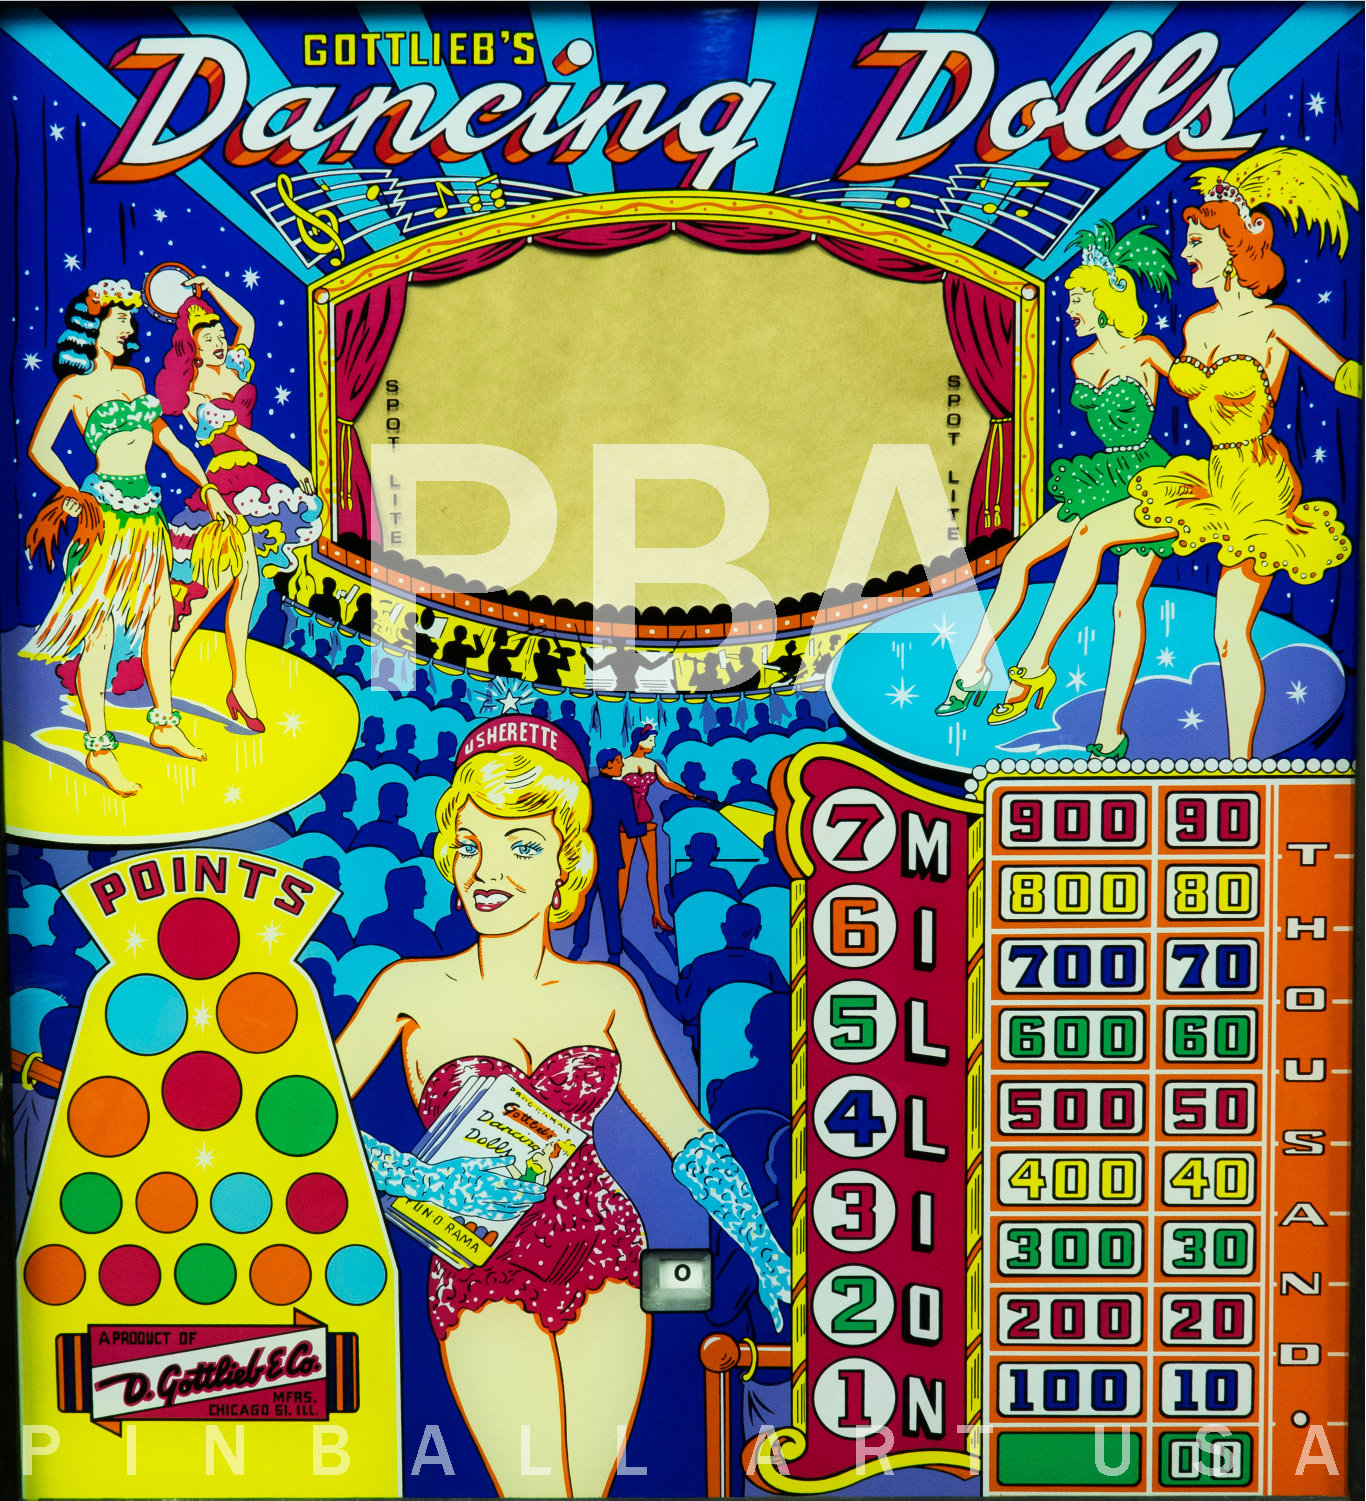 Dancing Dolls (Gottlieb, 1960) (PBA) Backglass